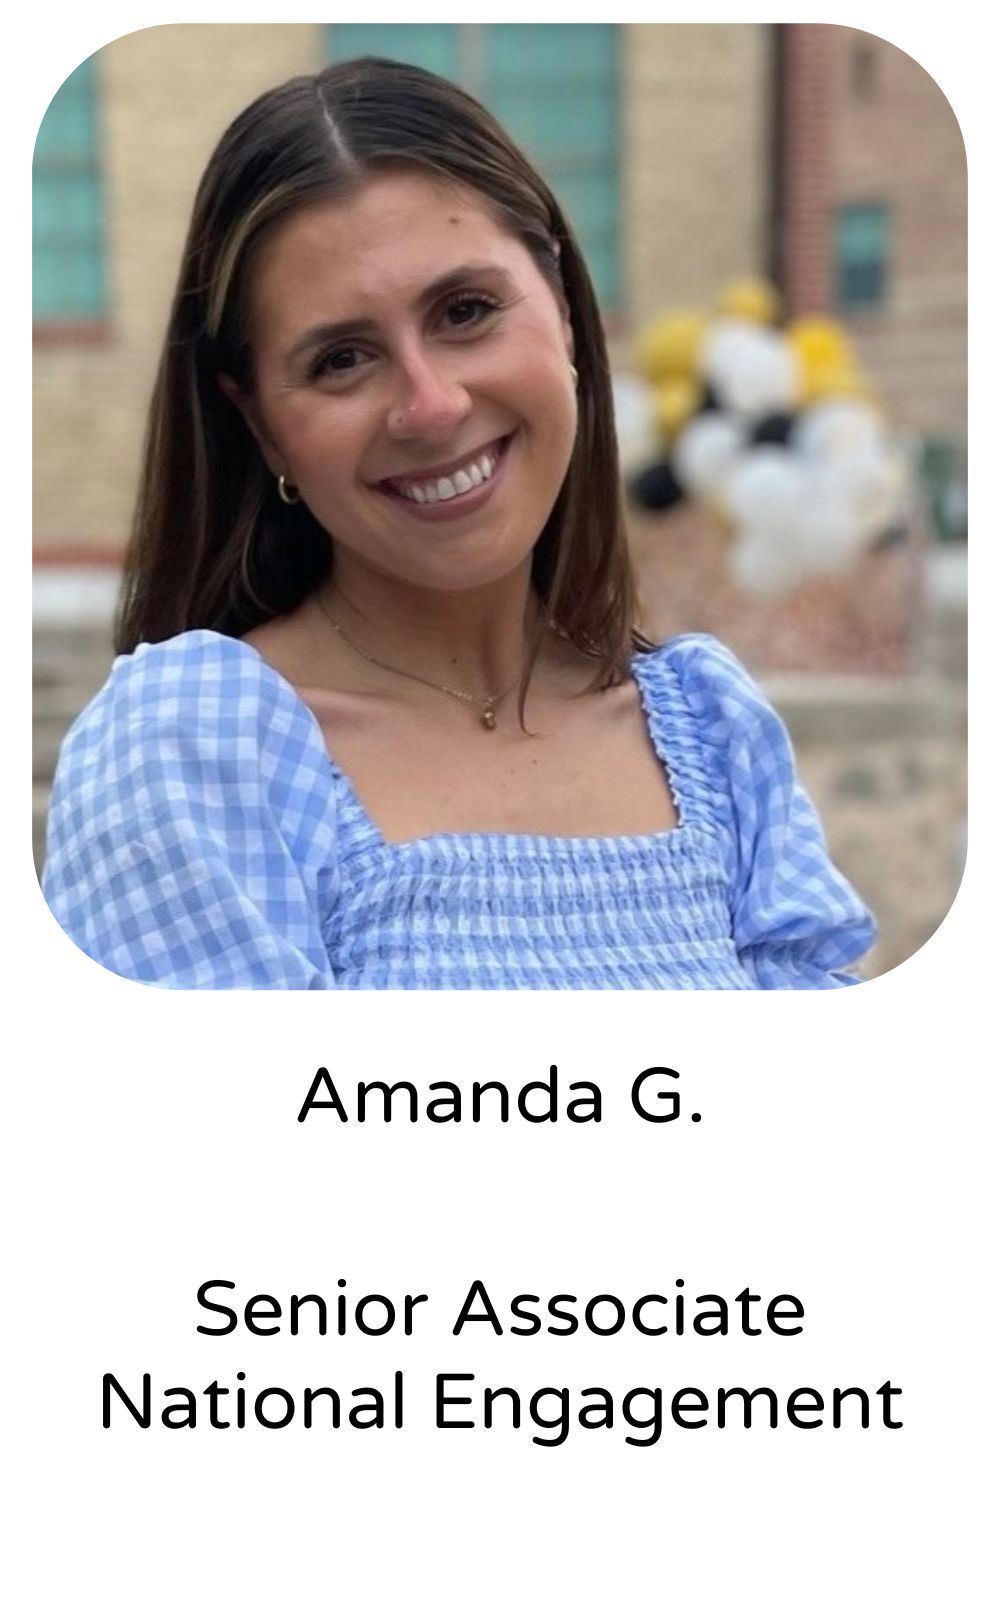 Amanda G., Senior Associate, National Engagement